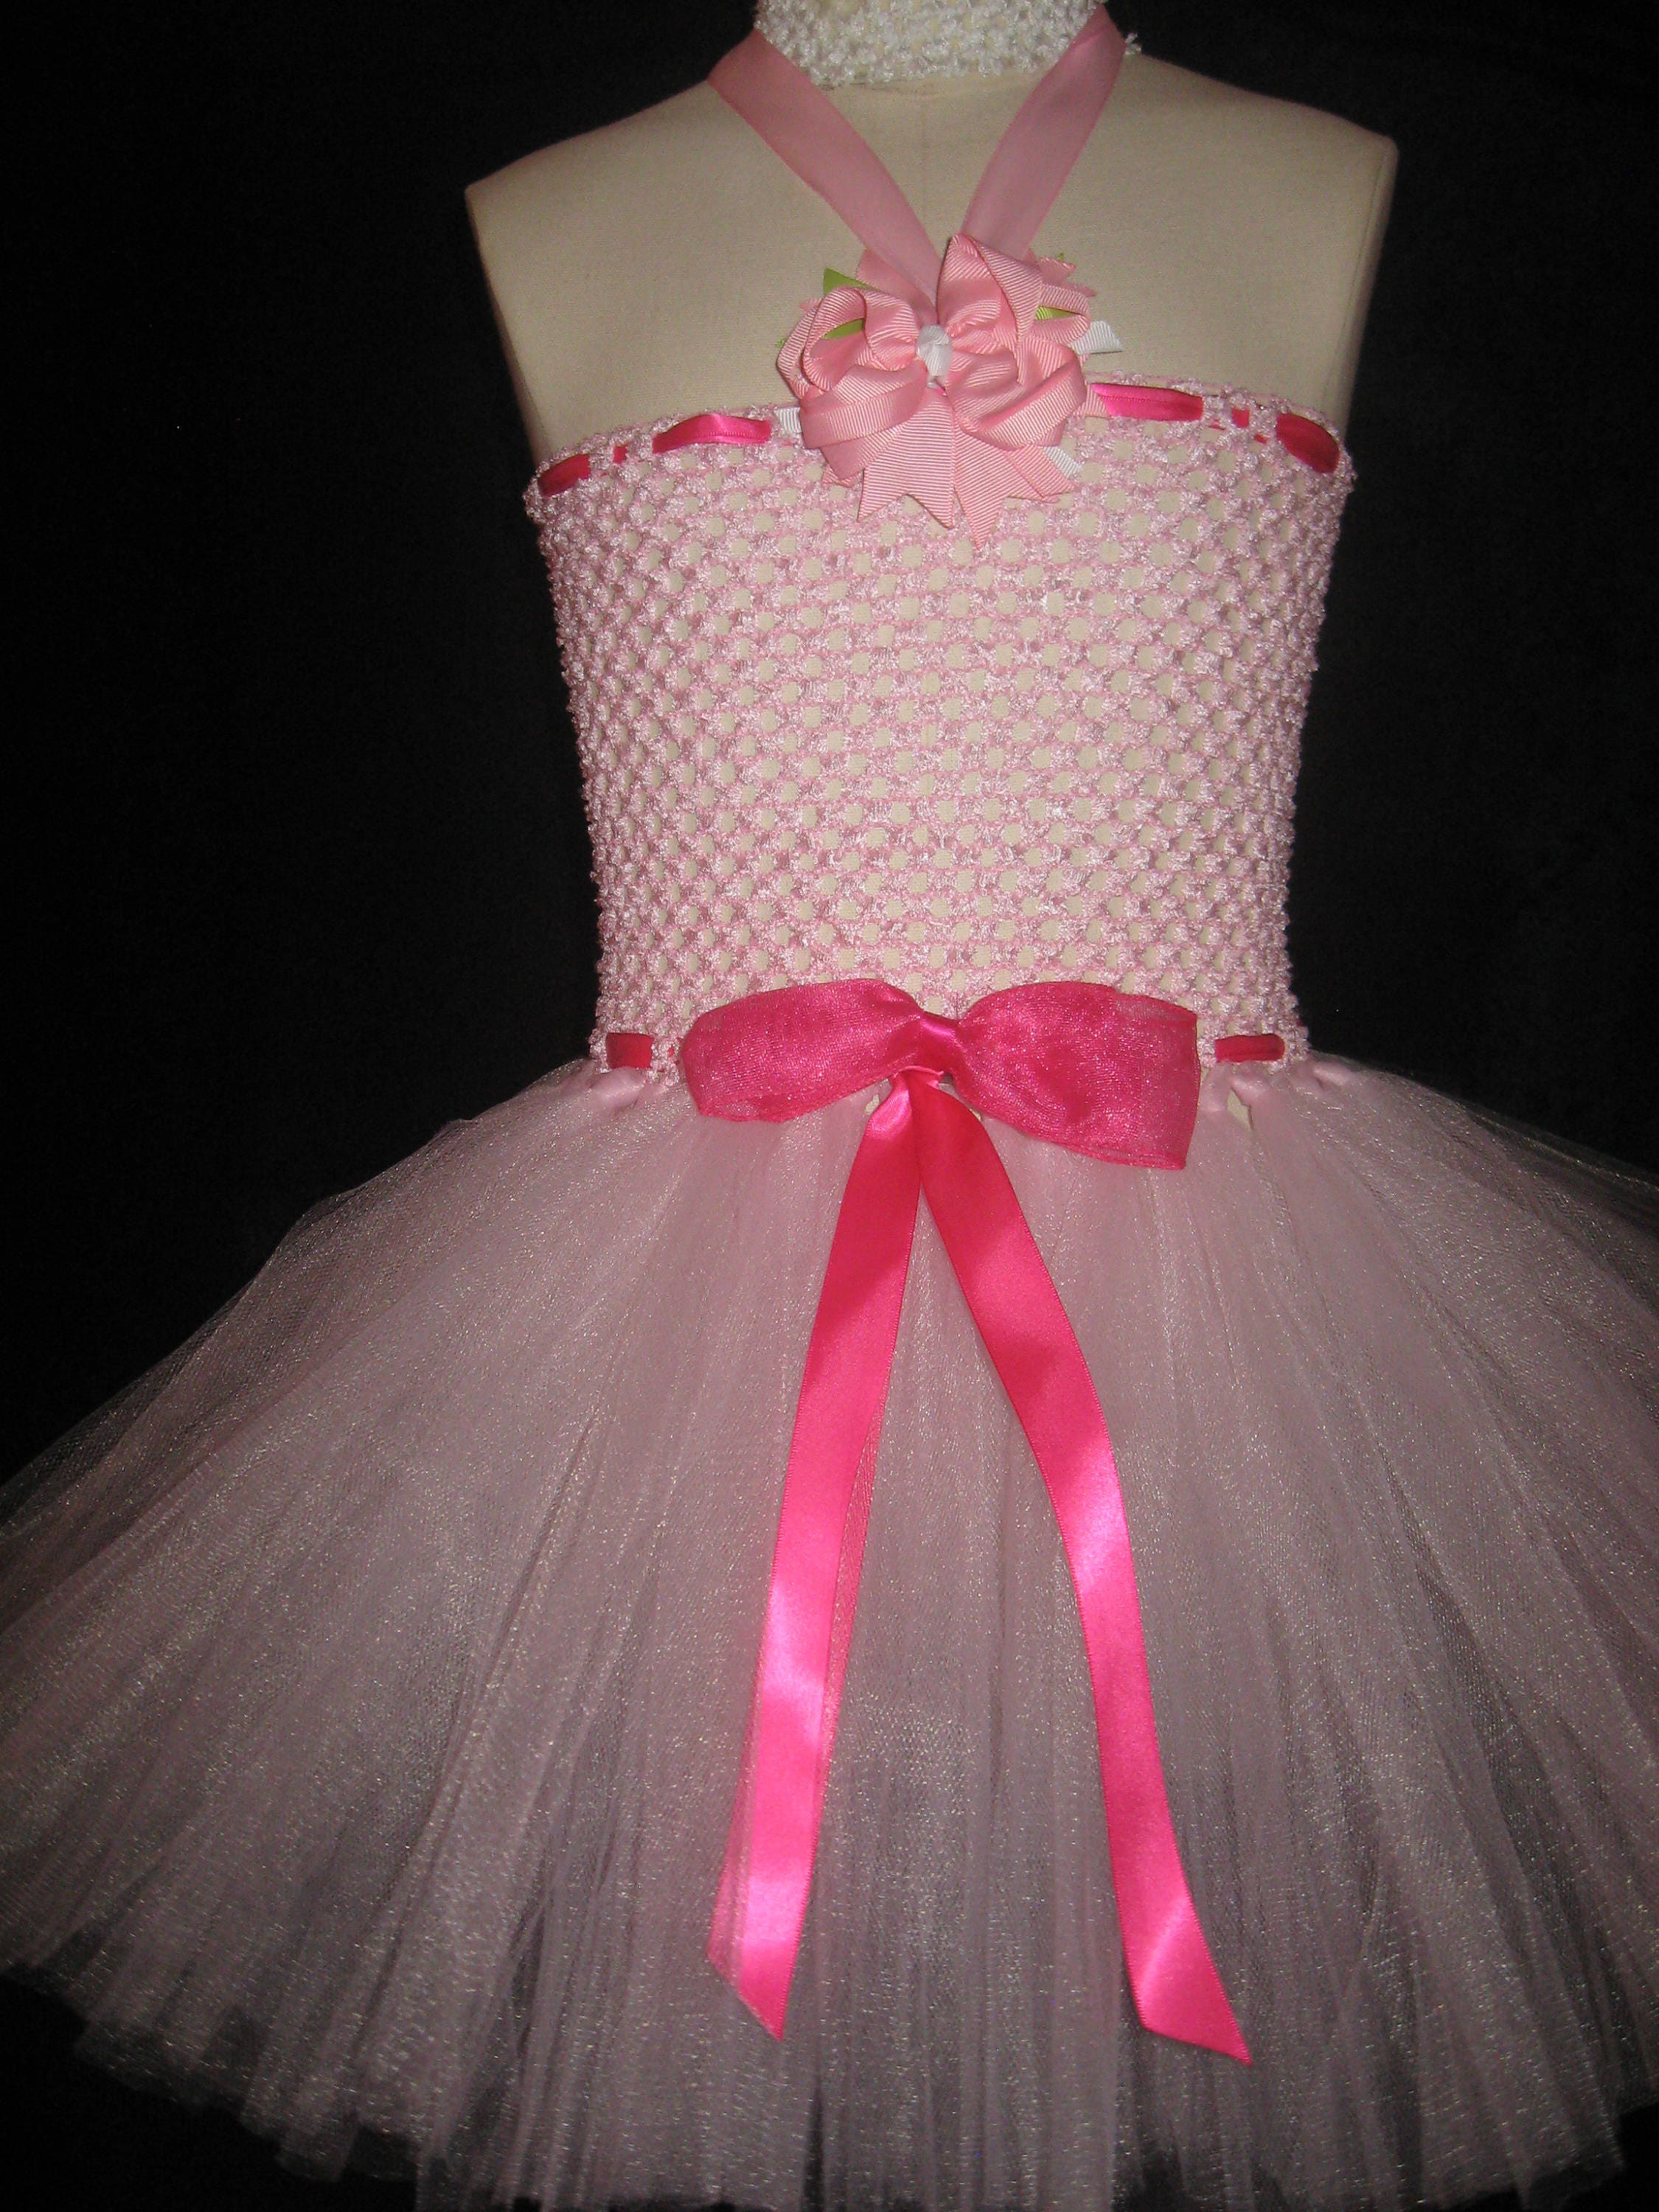 Handmade Tutu Dress Girls Tutu Dress Pink Tutu Dress Birthday Tutu Dress Ballet Tutu Dress